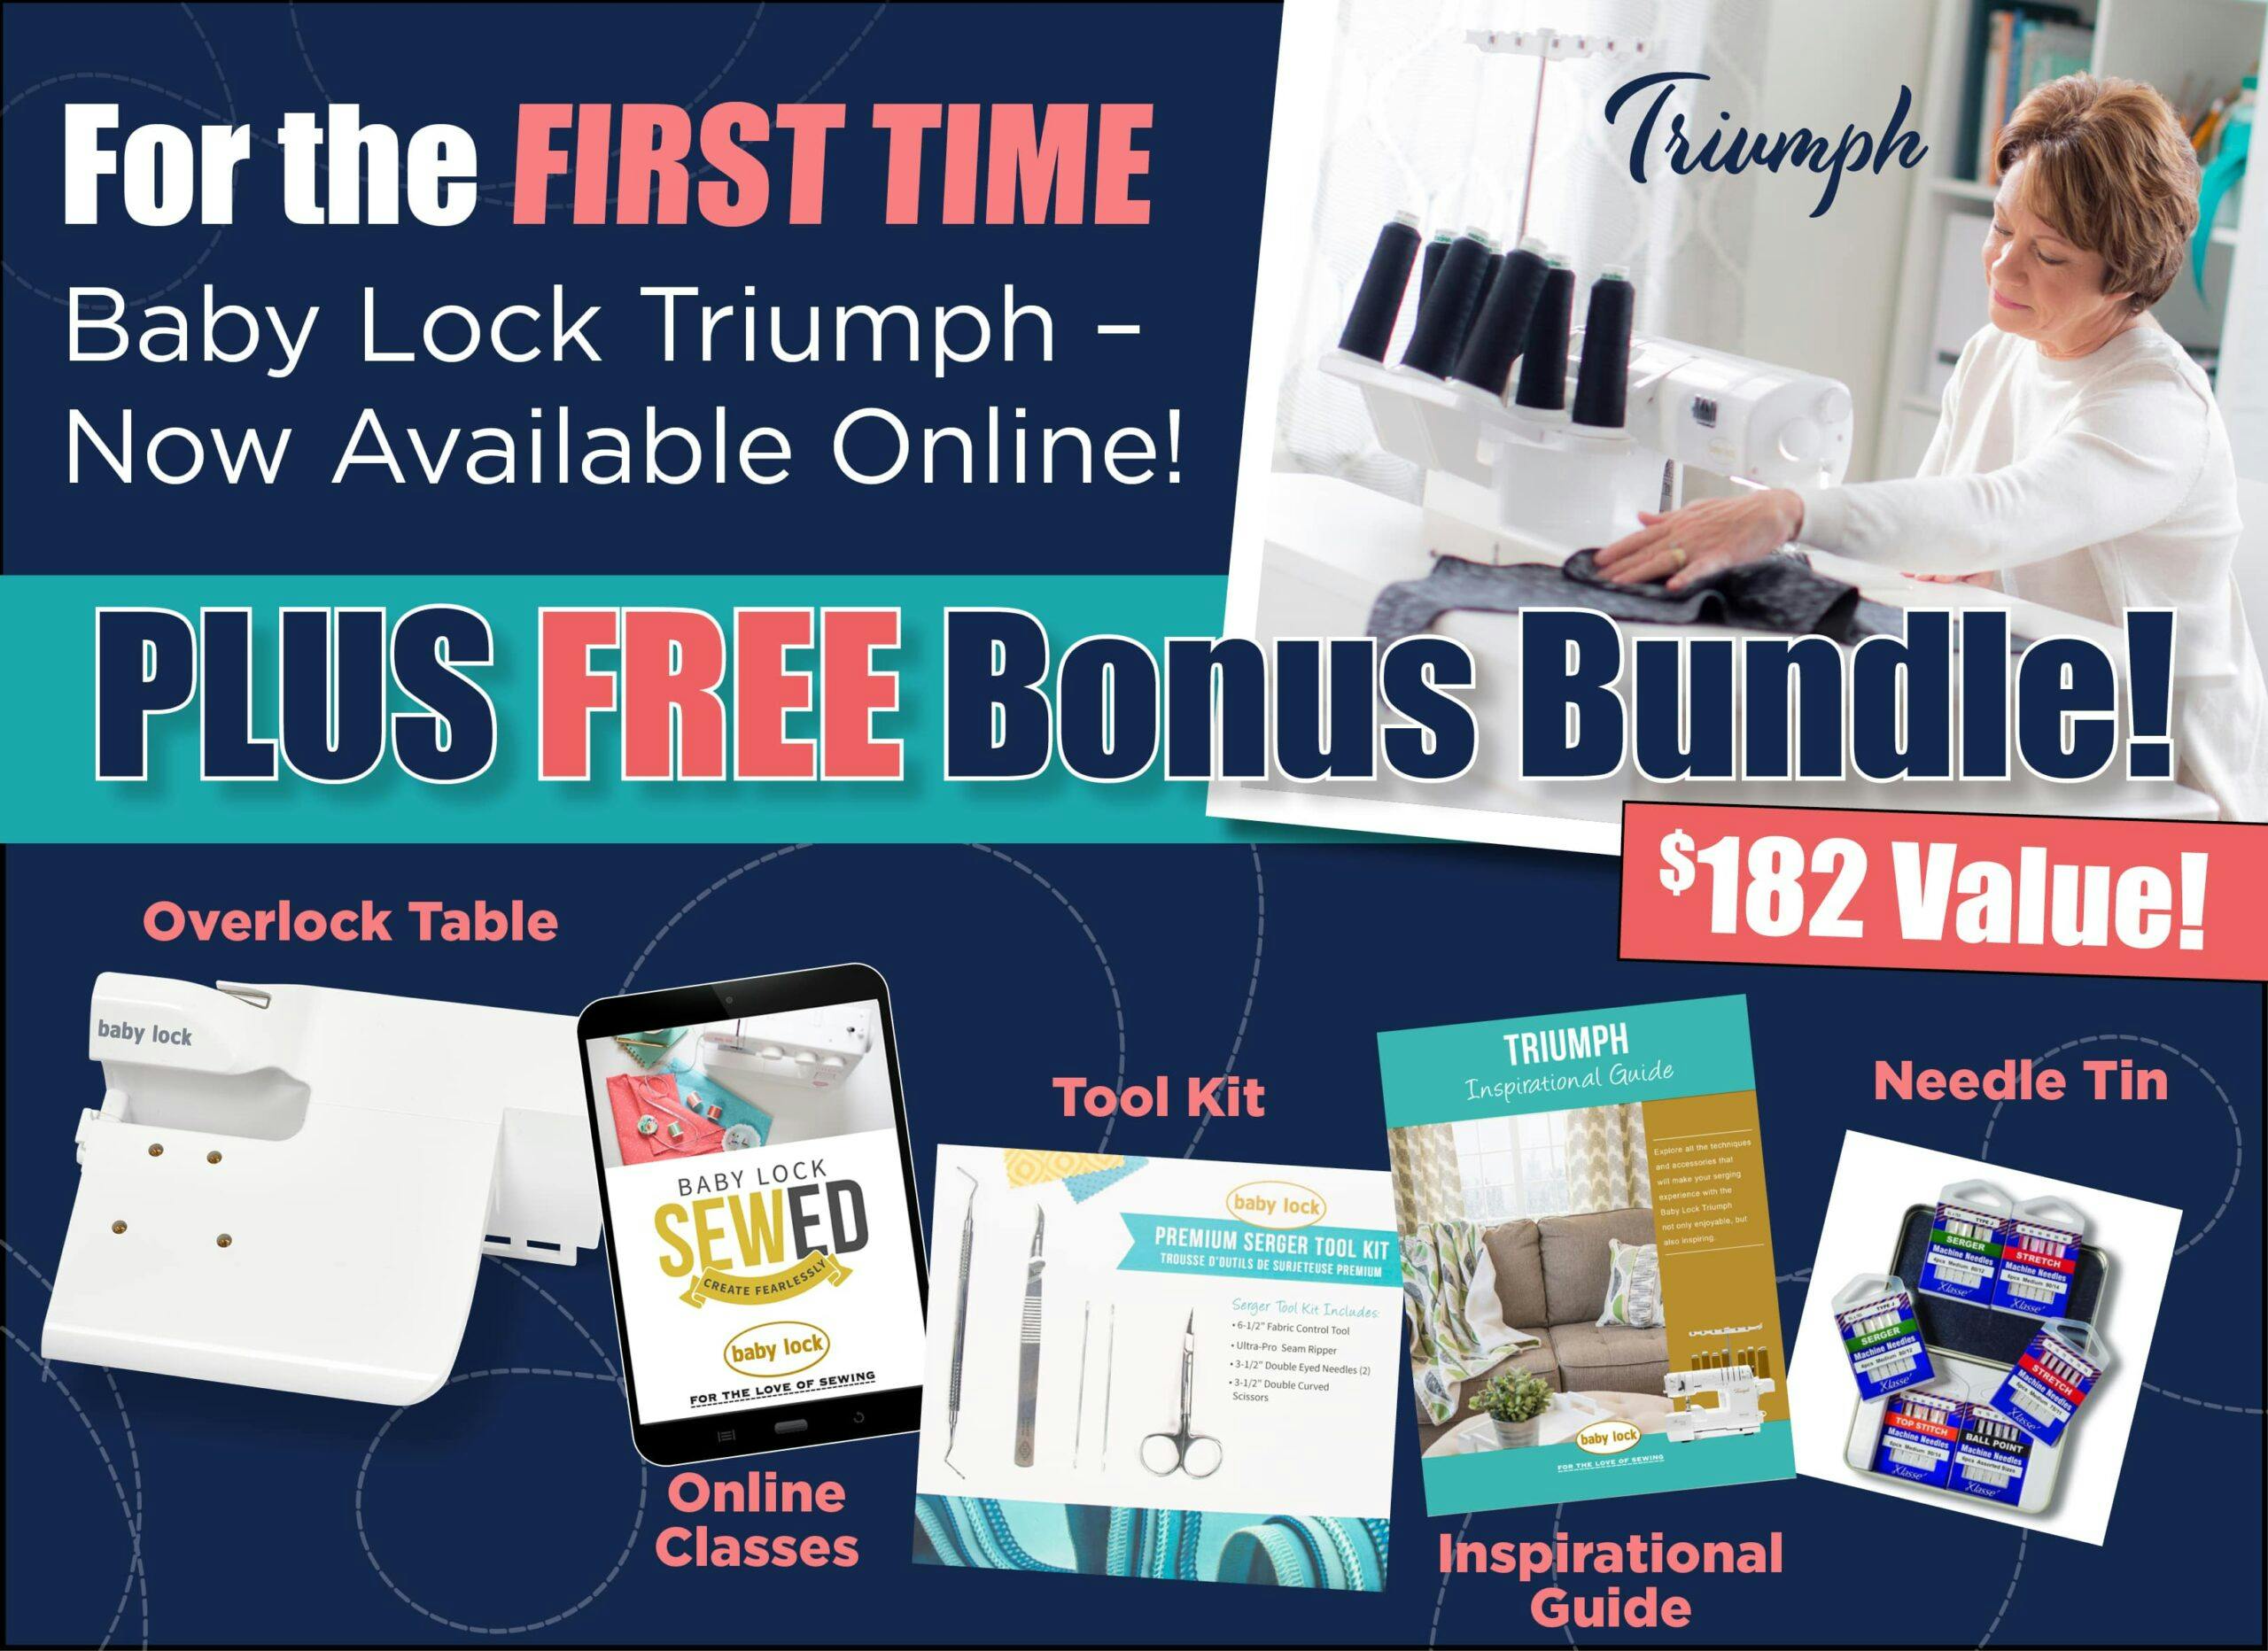 FREE Bonus Bundle with purchase of Baby Lock Triumph